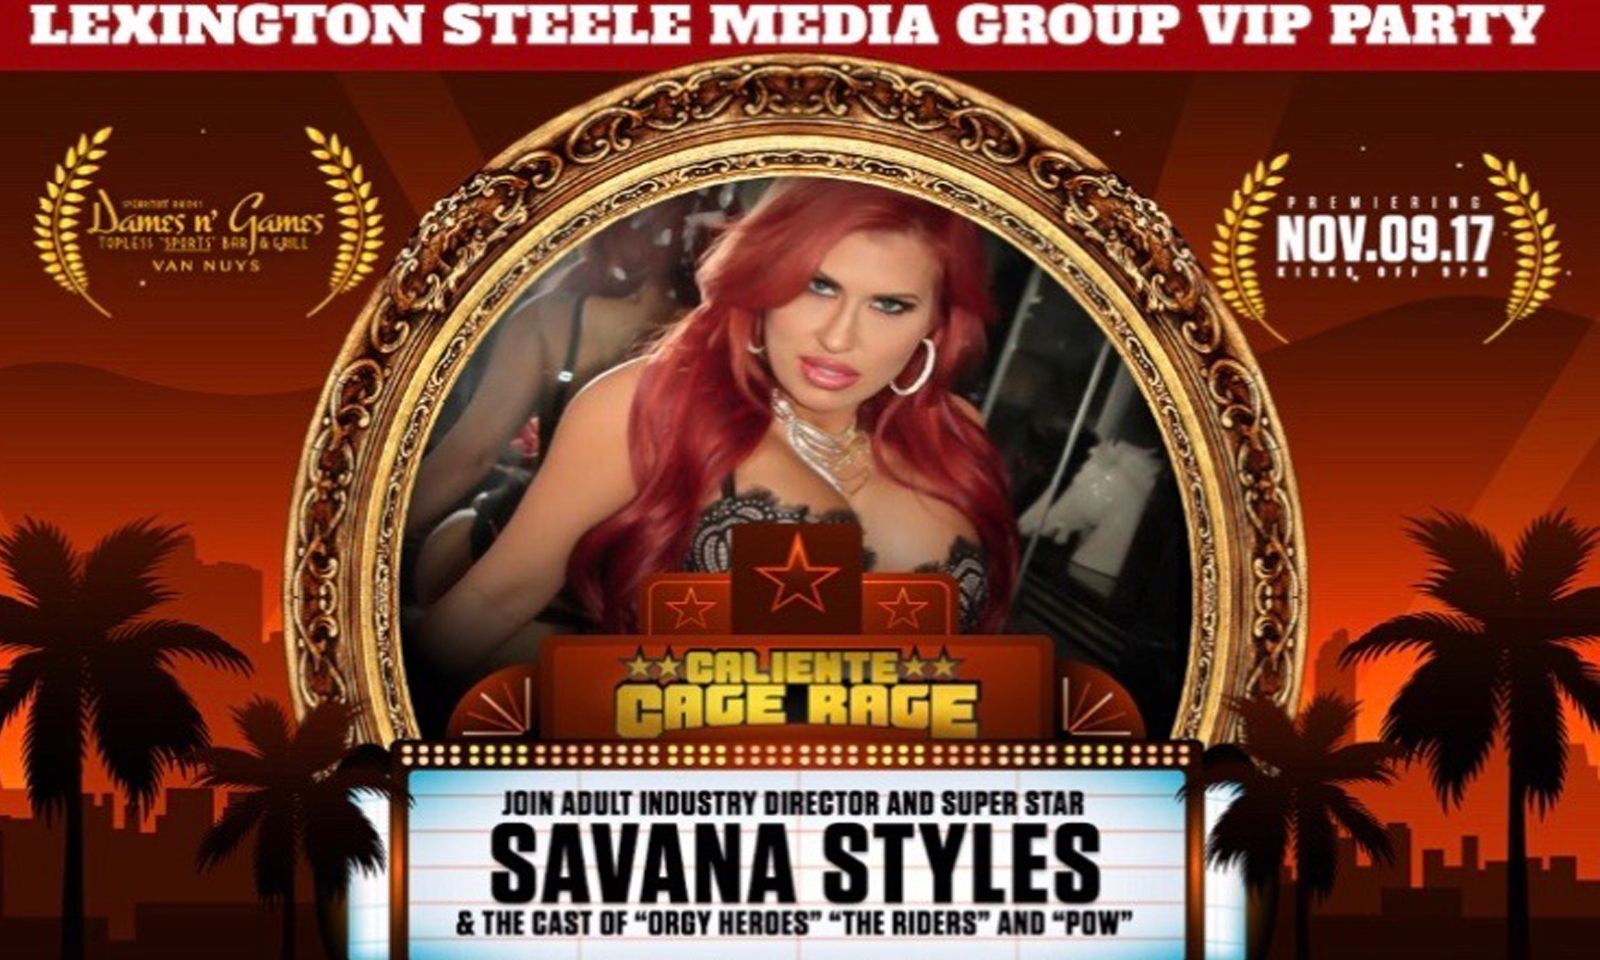 Savana Styles to Host VIP Party Thursday Night